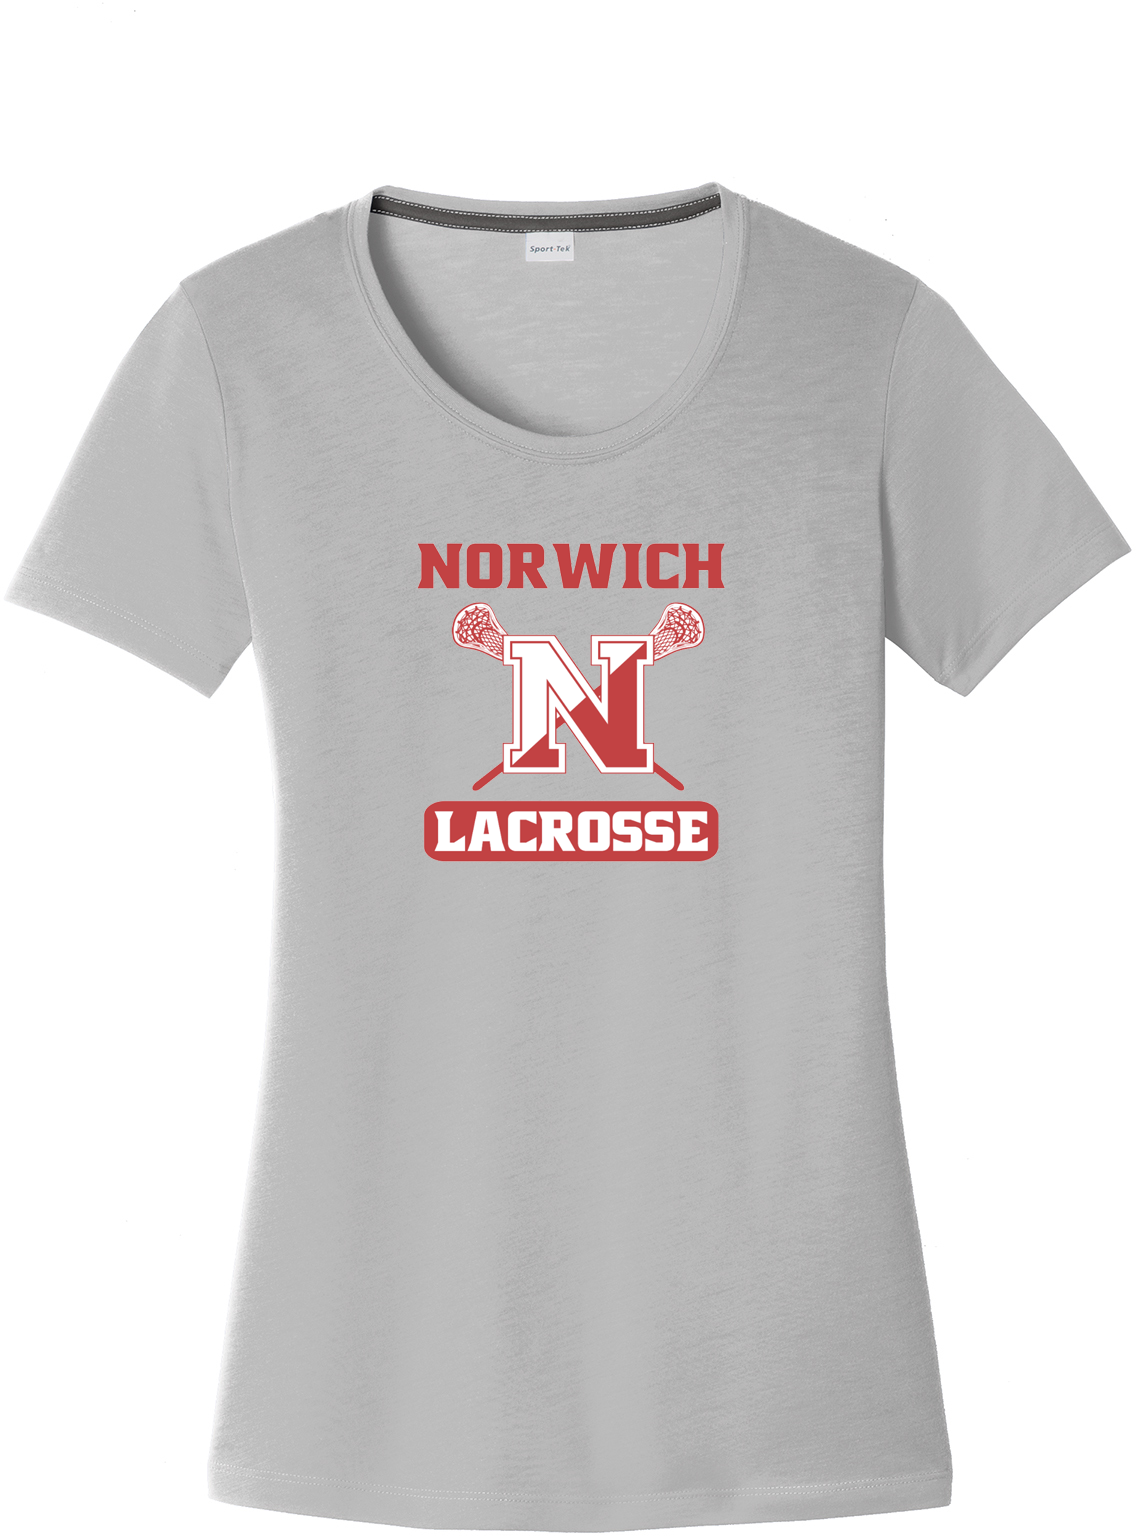 Norwich Youth Lacrosse Women's CottonTouch Performance T-Shirt